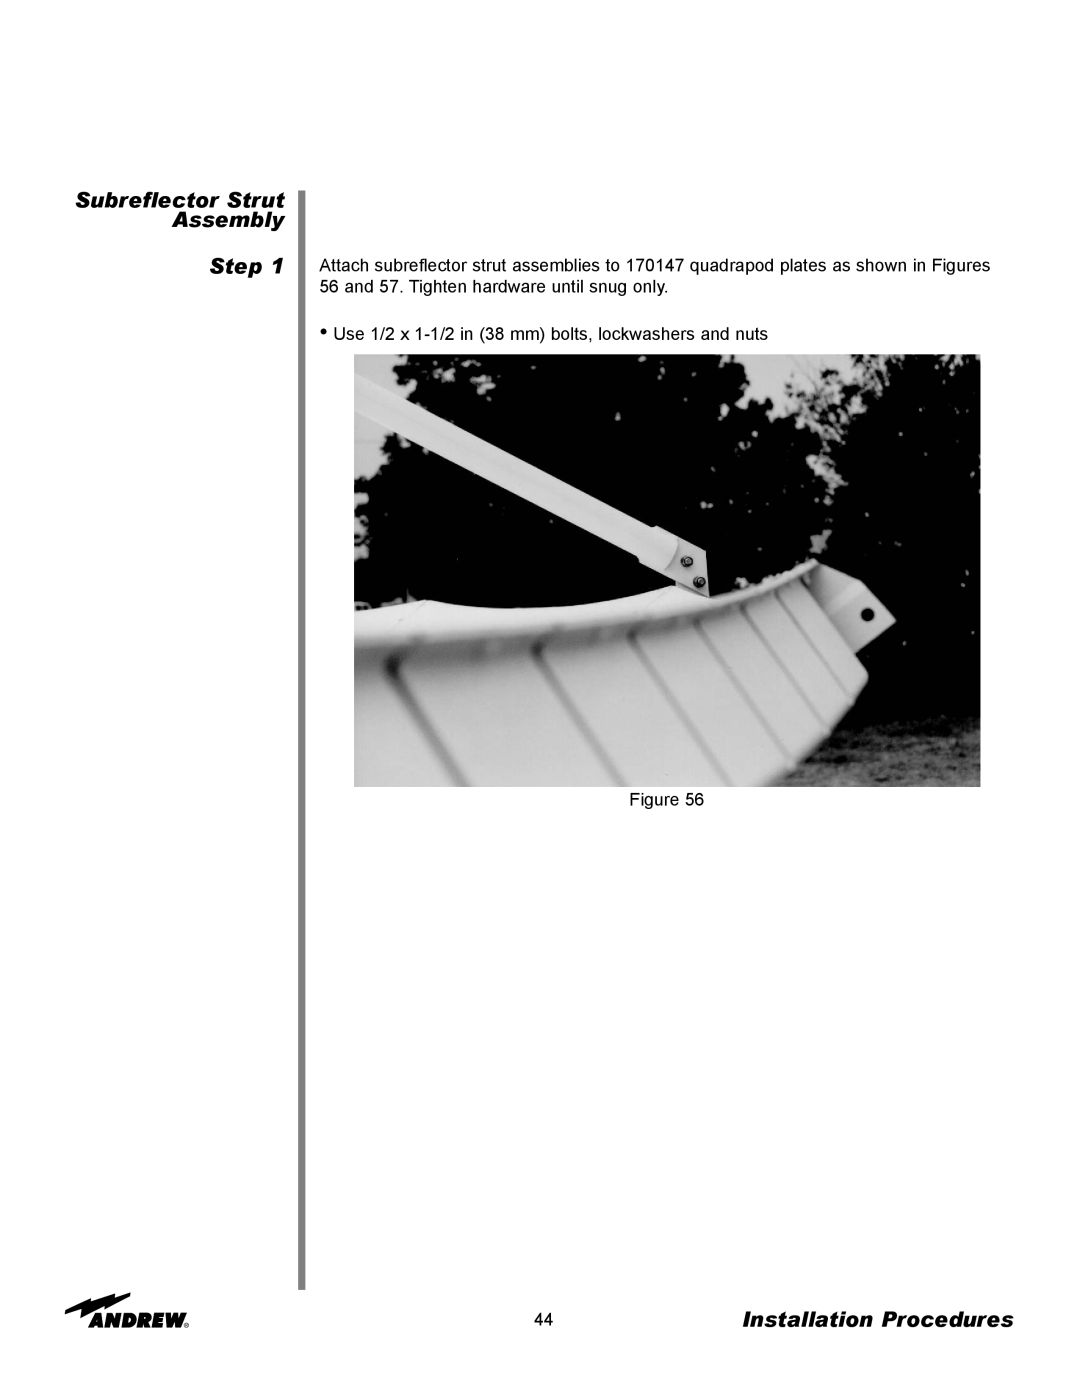 Andrew ES73 manual Subreflector Strut Assembly Step, Installation Procedures, Figure 